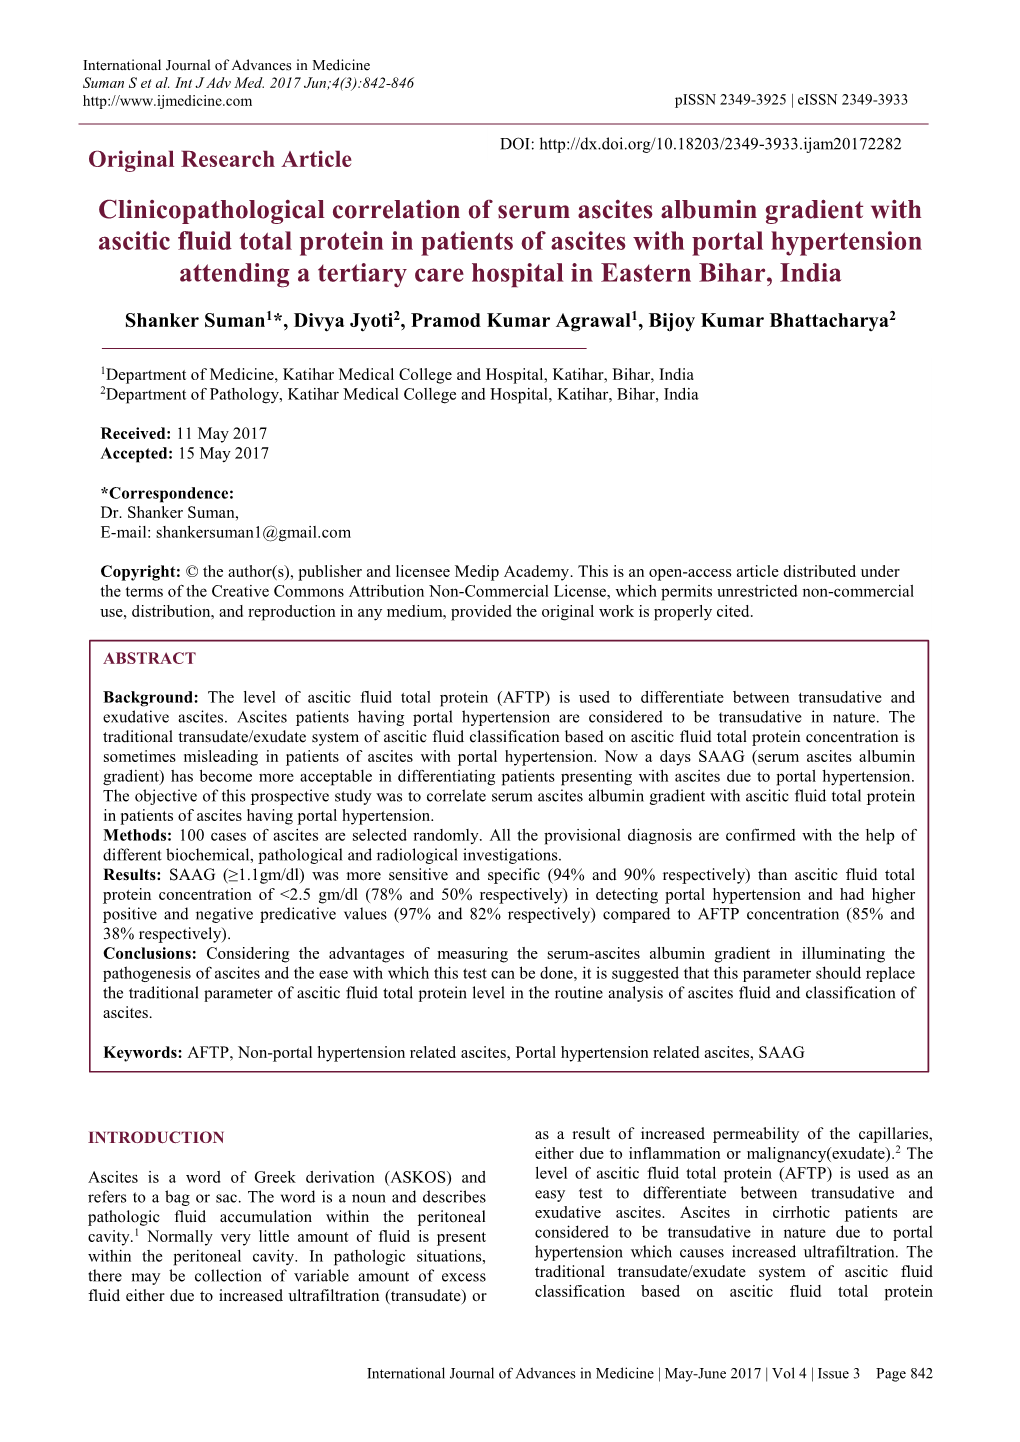 Clinicopathological Correlation of Serum Ascites Albumin Gradient With